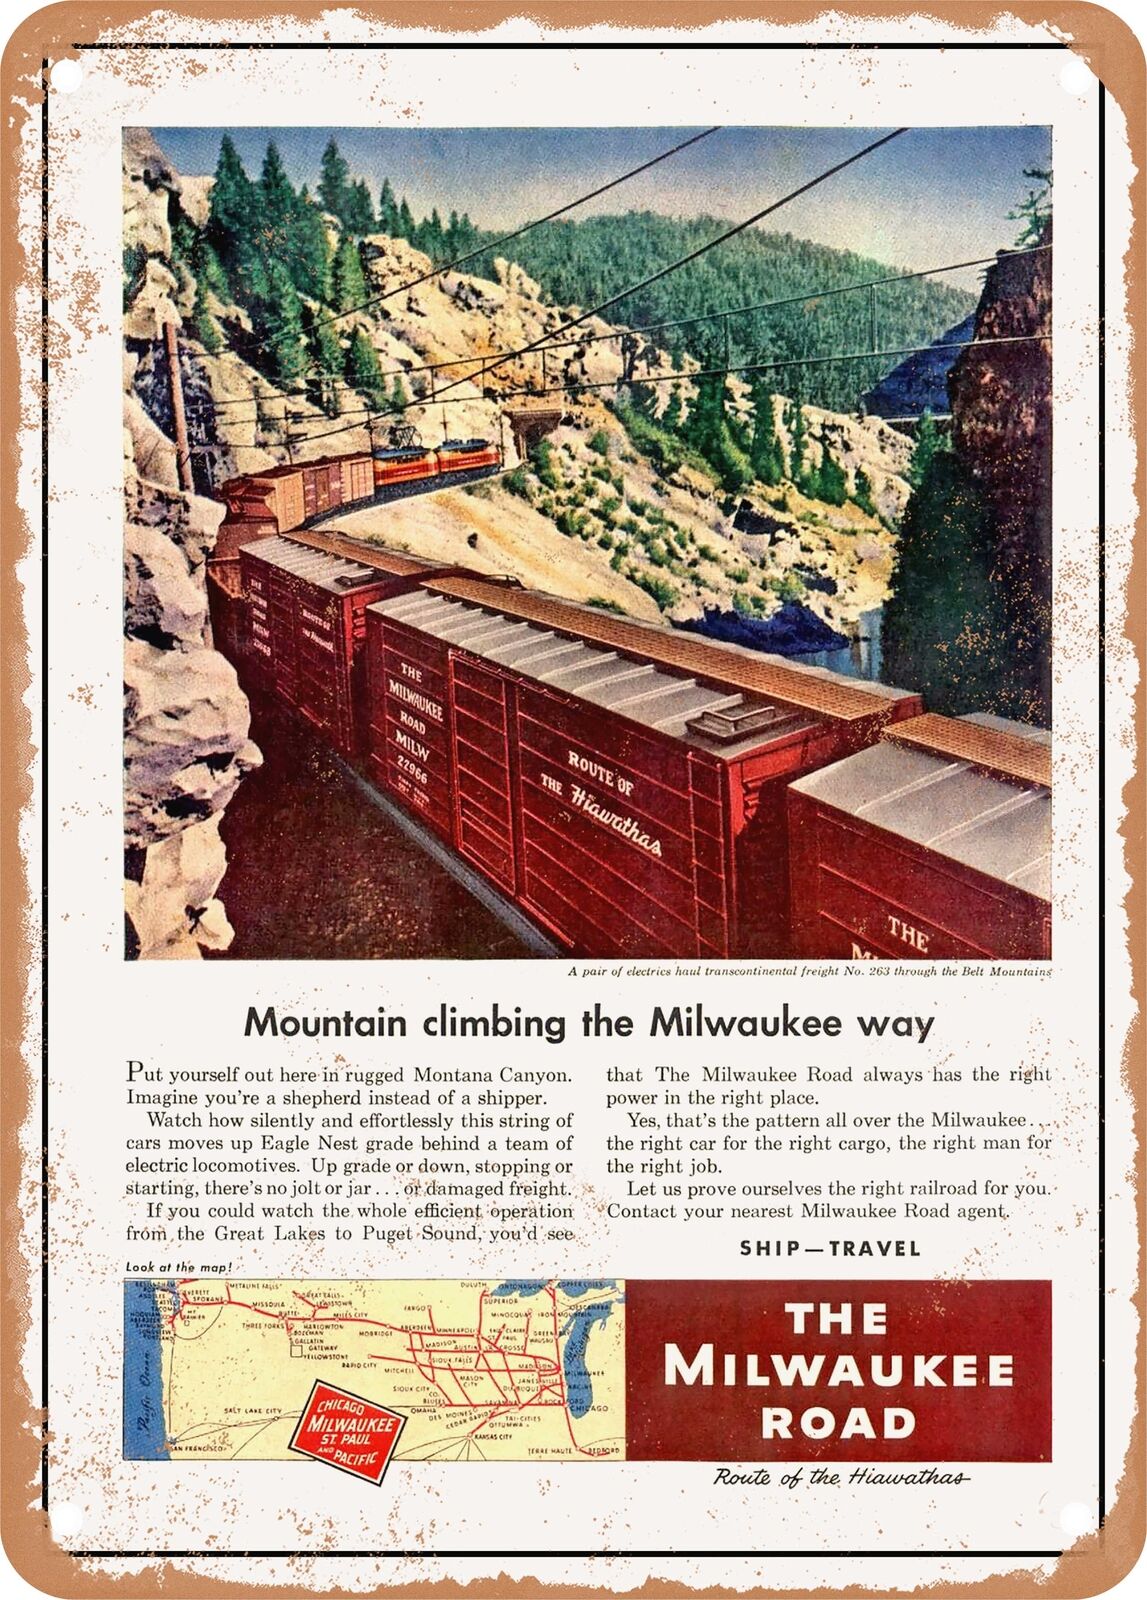 METAL SIGN - 1952 Mountain Climbing the Milwaukee Way the Milwaukee Road